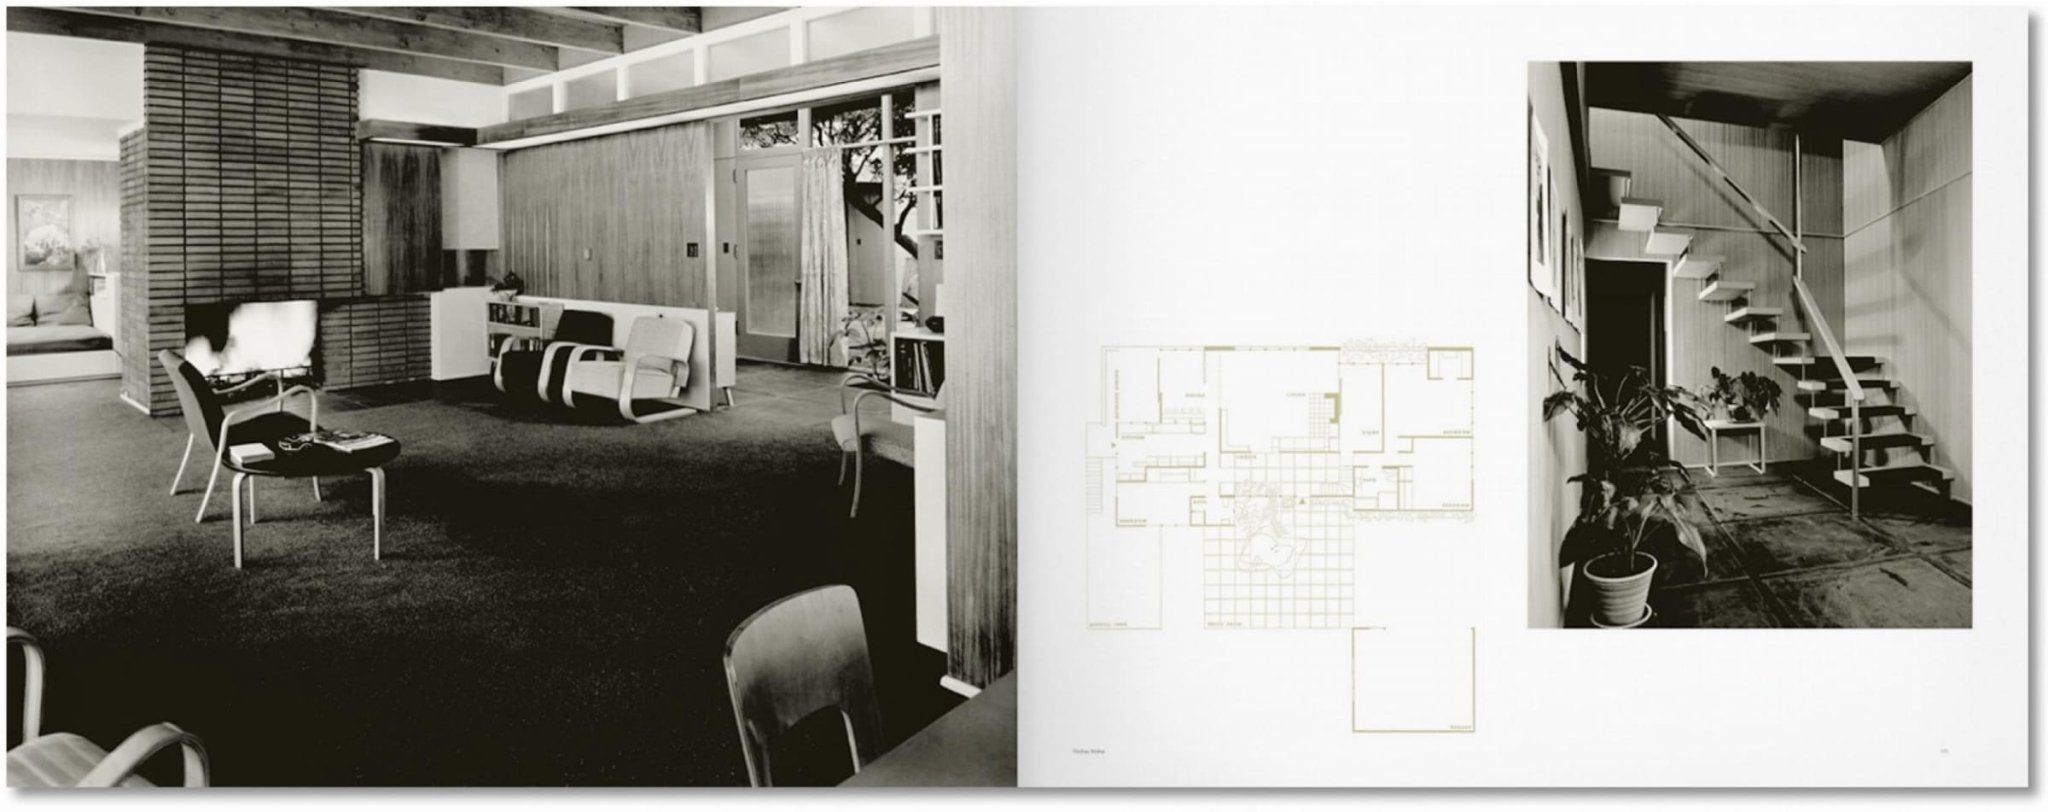 Case Study Houses. The Complete CSH Program 1945-1966 Non-Fiction by Taschen Verlag